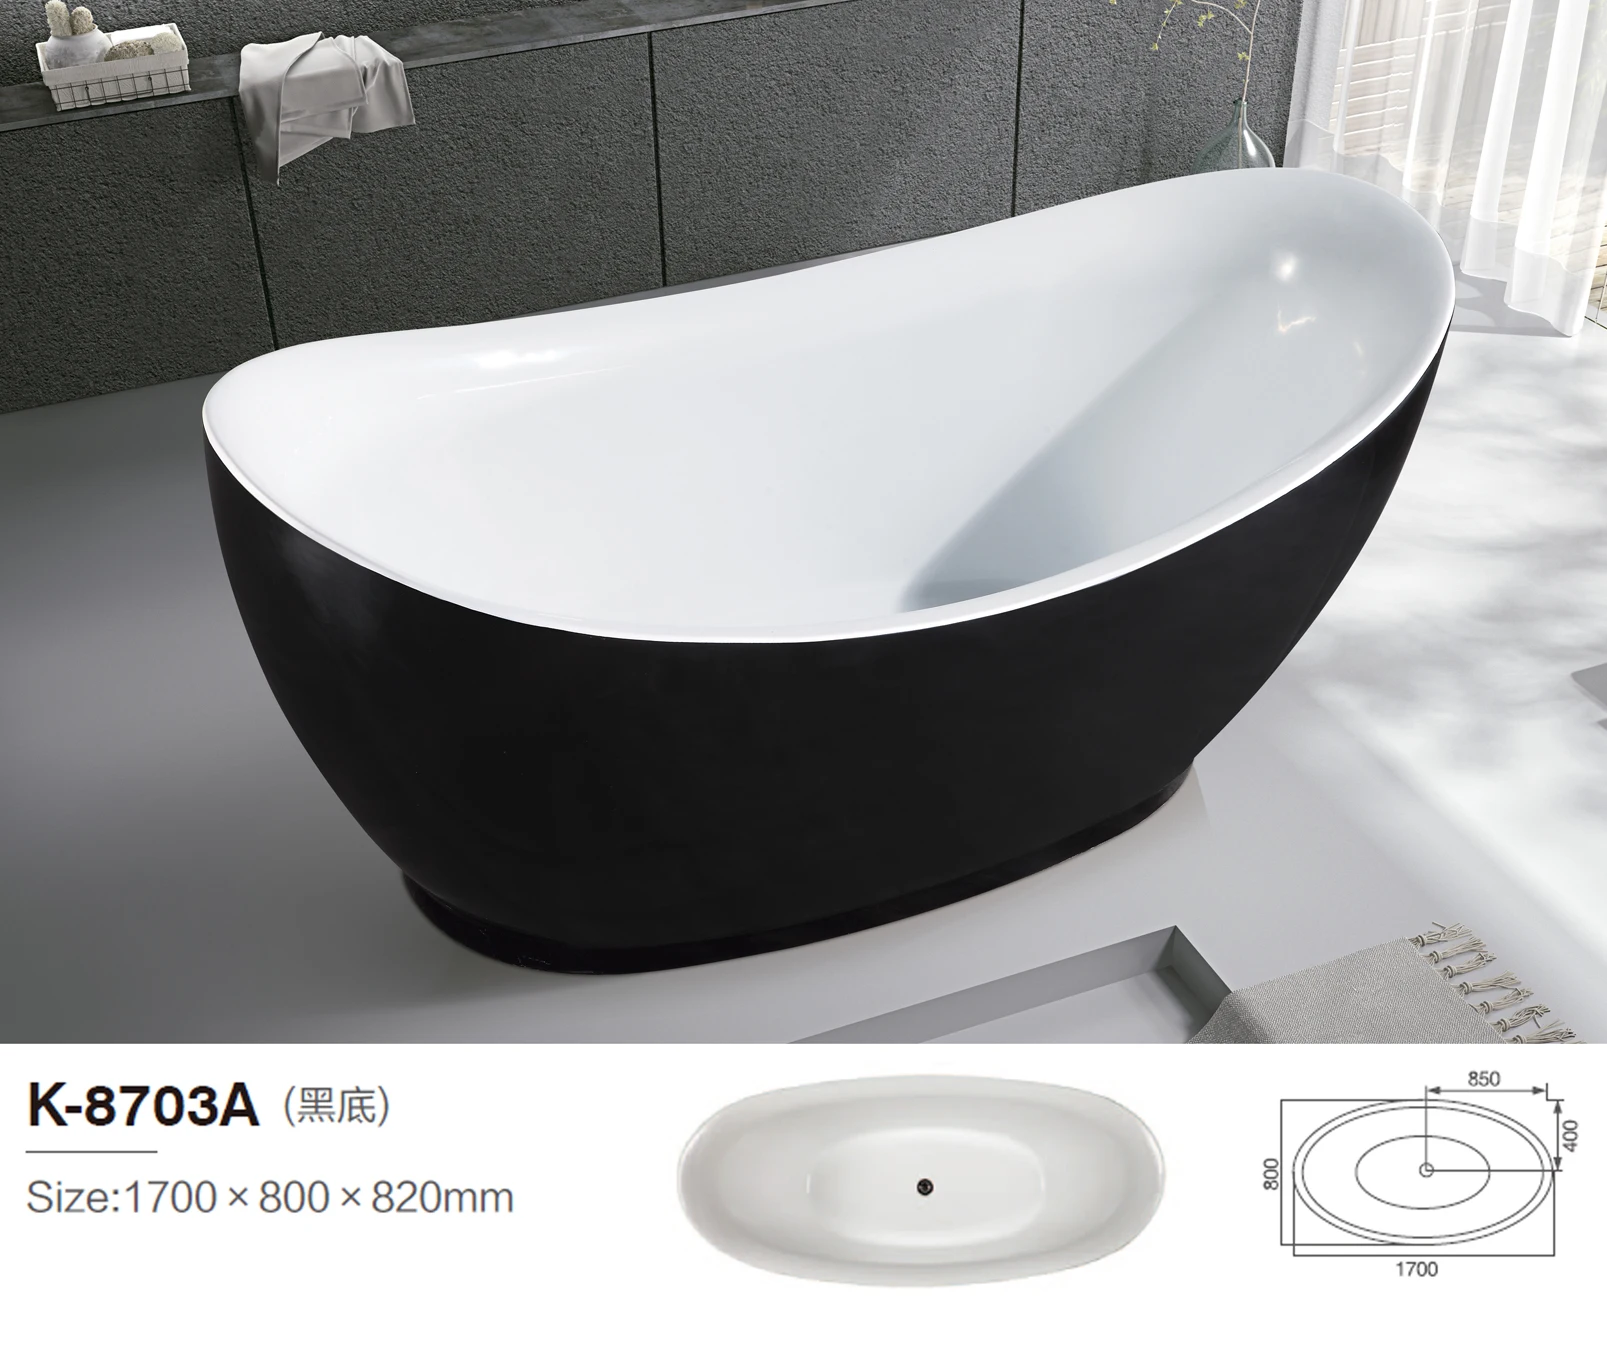 JOININ morden Cheap price Foshan Bath Supplier FreeStanding Bathtub  Acrylic black Bath tub 8703A